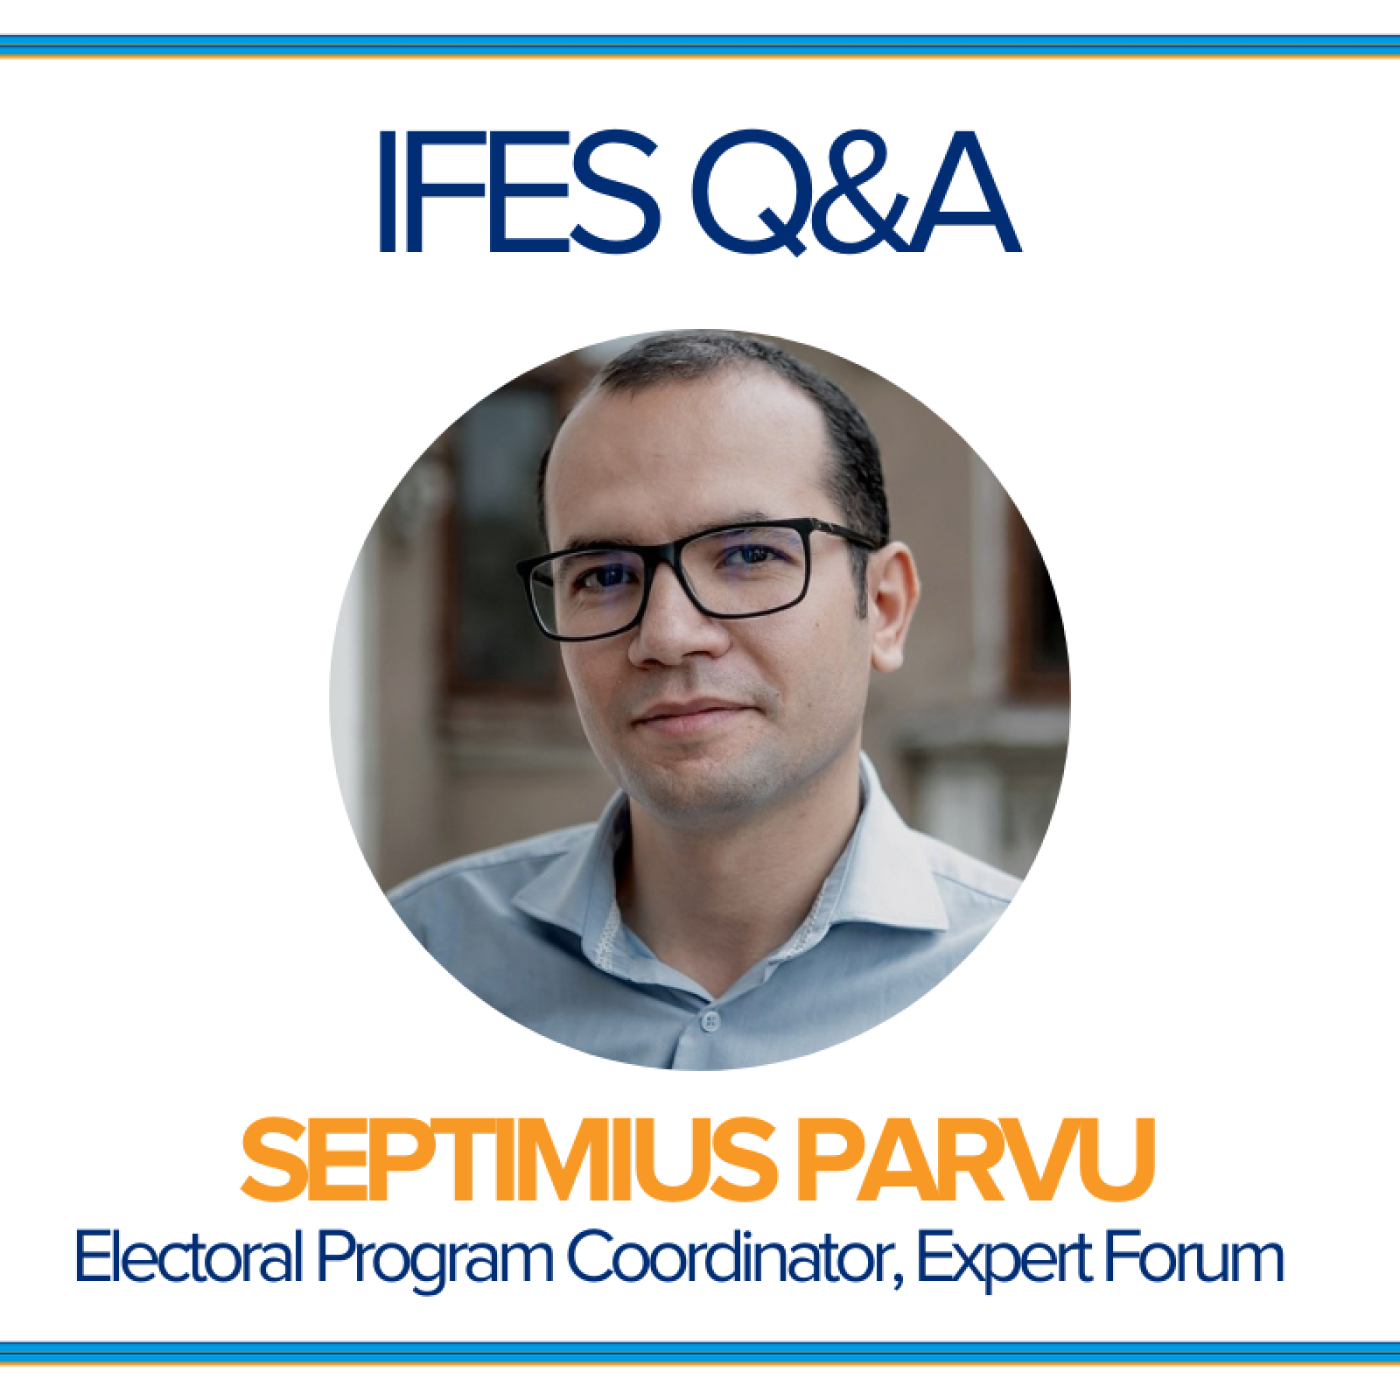 IFES Q&A Septimus Parvu, electoral program coordinator of Expert Forum